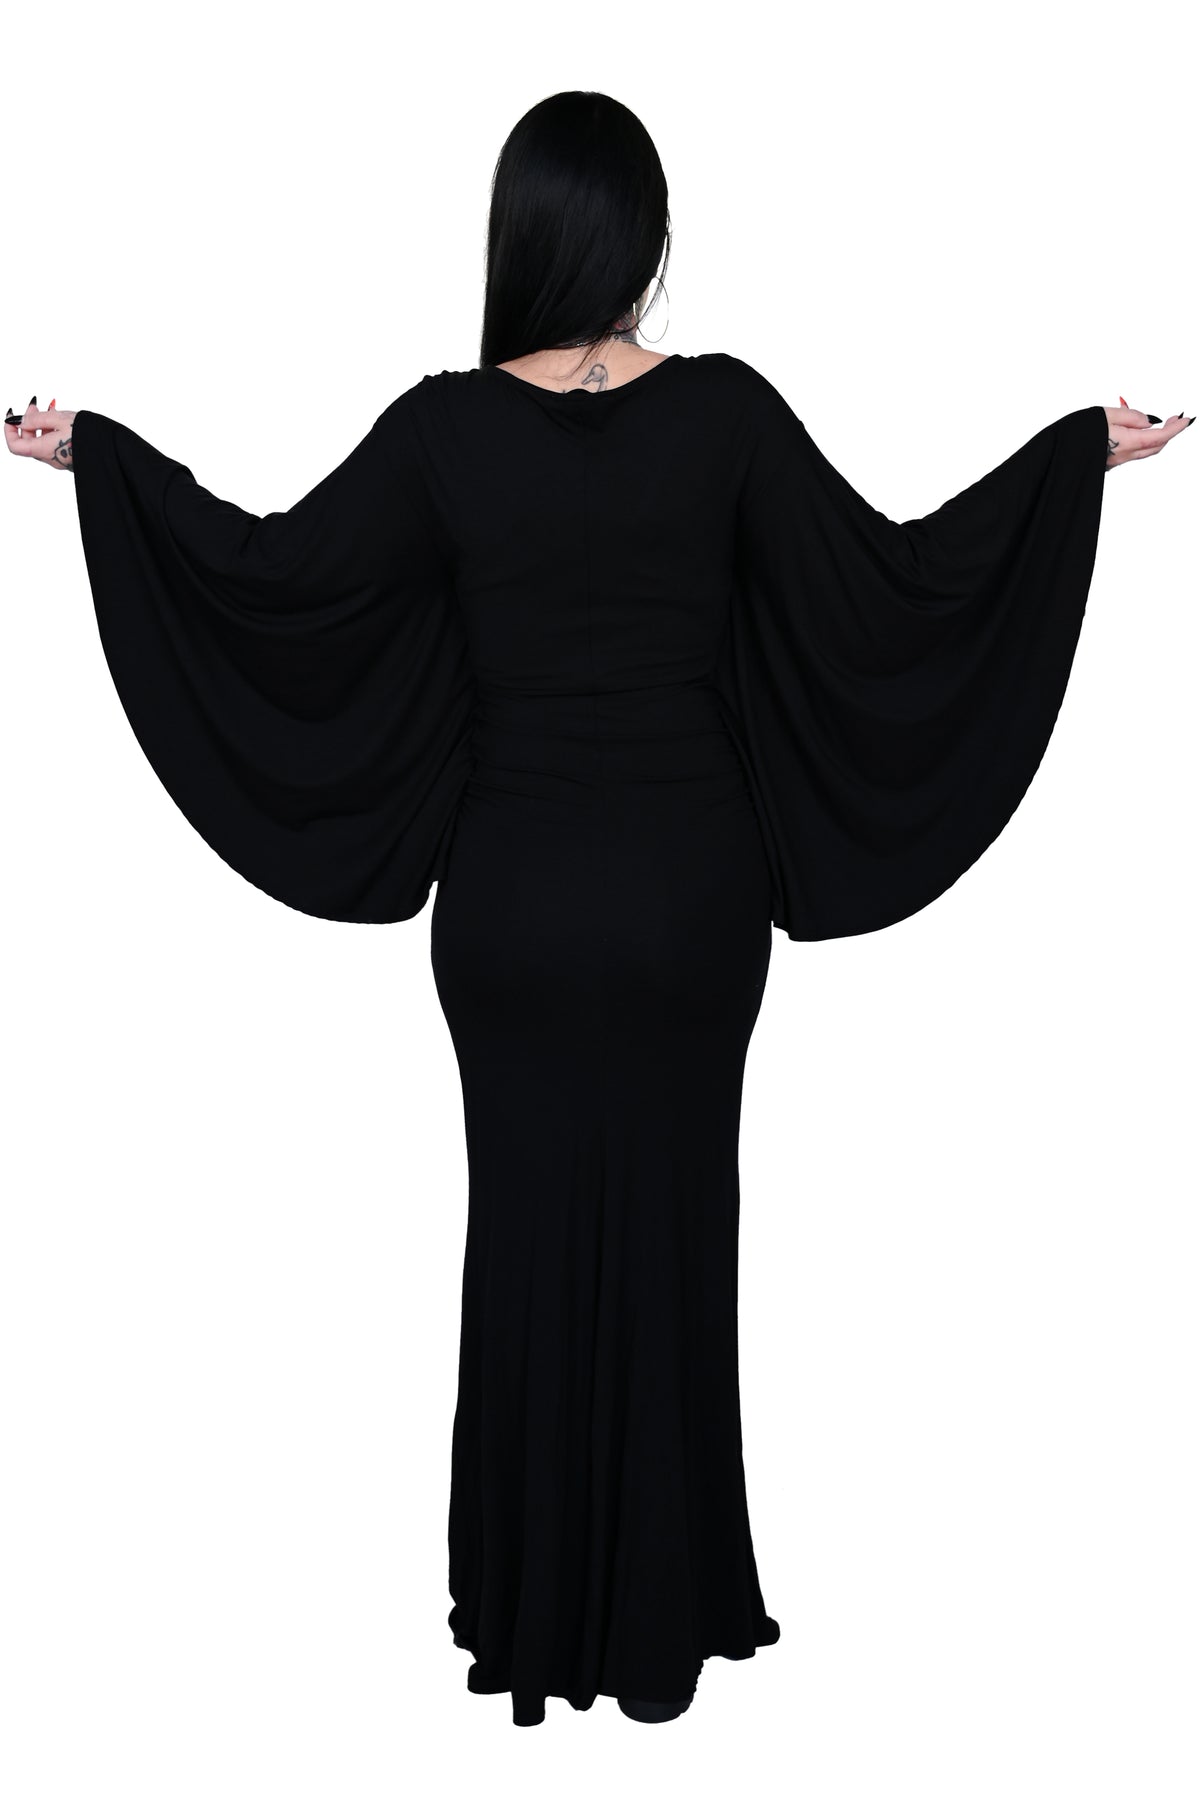 Angelina Batwing Dress - XS+3XL left! Final Sale